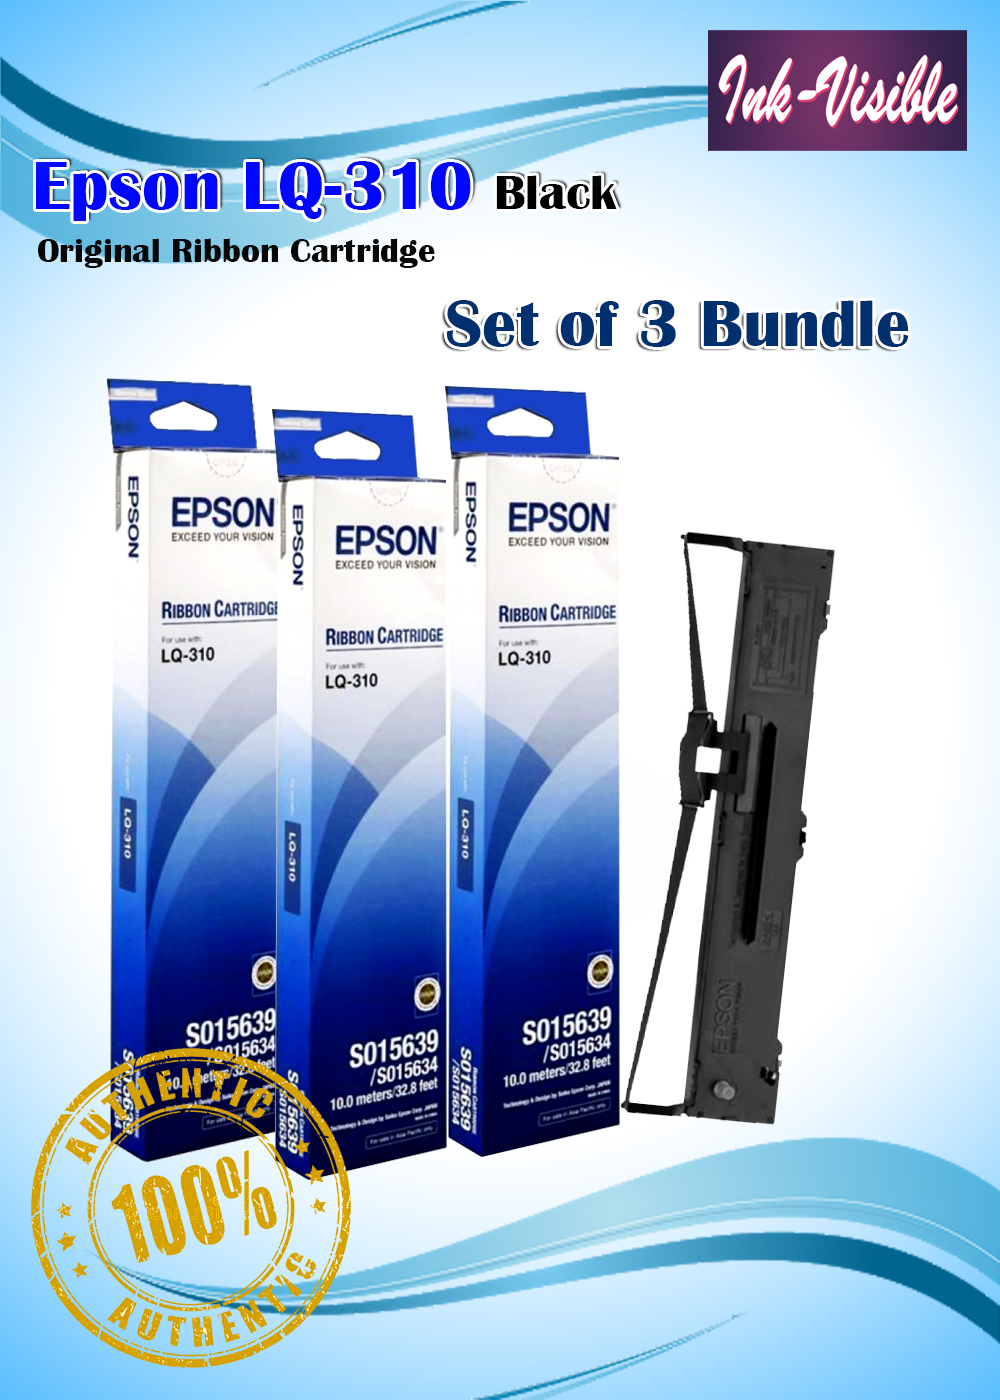 Epson S015639 Original Ribbon Cartridge for LQ-310 Printer set of 3 ...